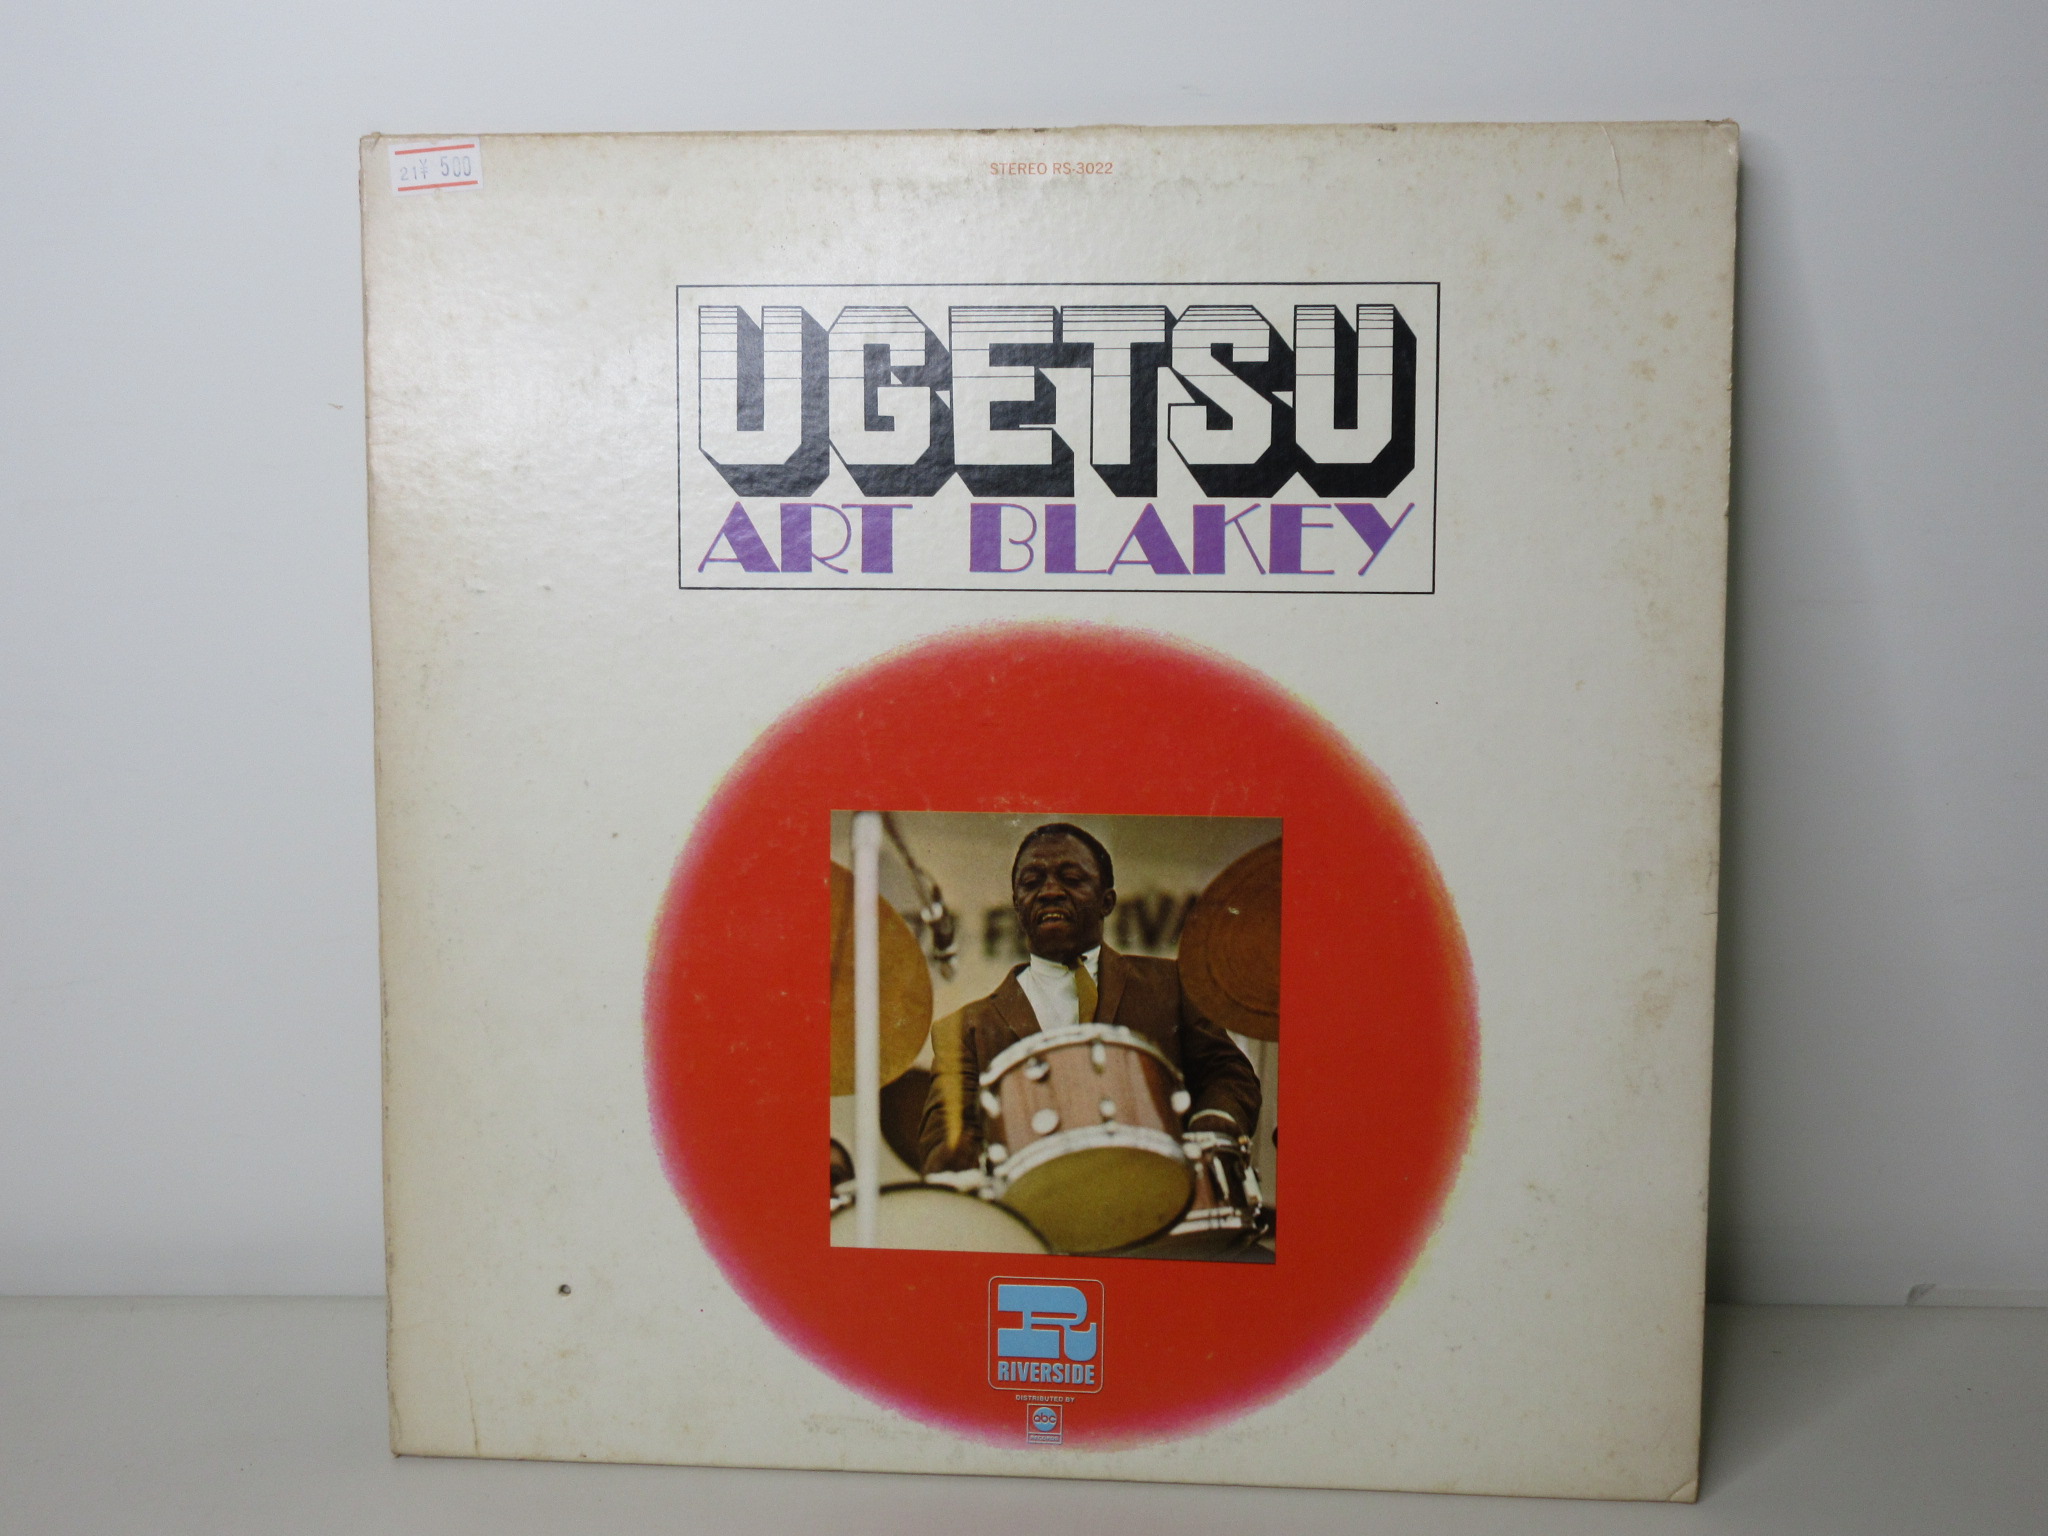 Art Blakey - Ugetsu   輸入盤　RS 3022